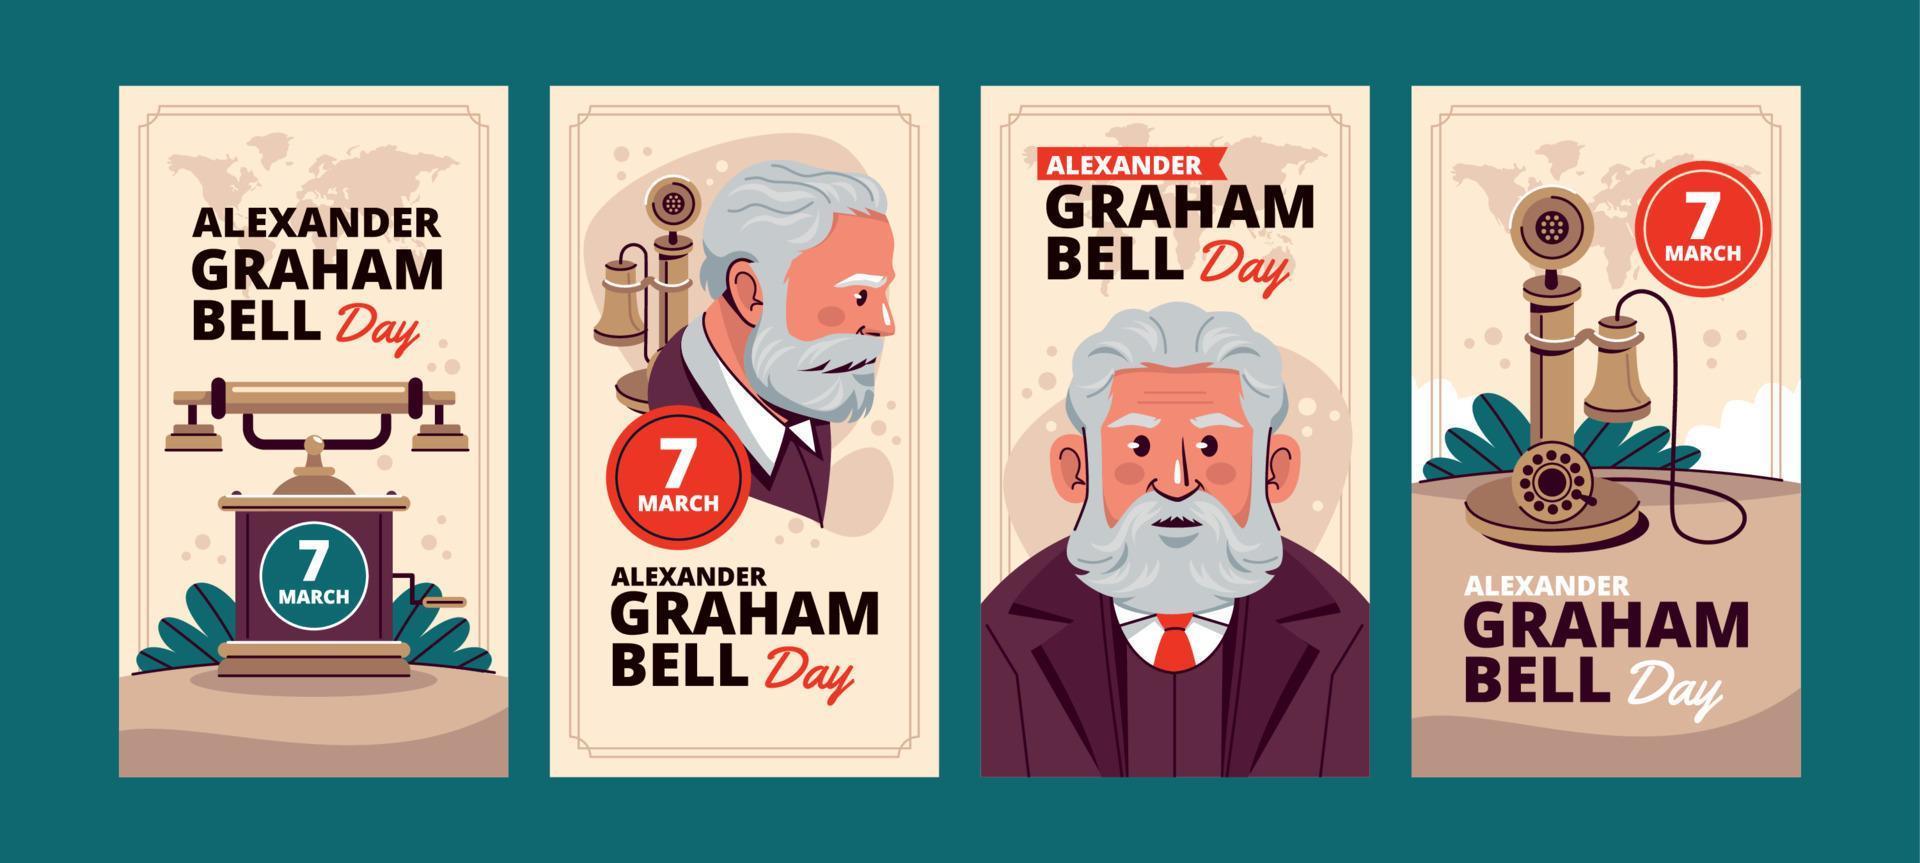 Alexander Graham Bell Day Social Media Story Template vector